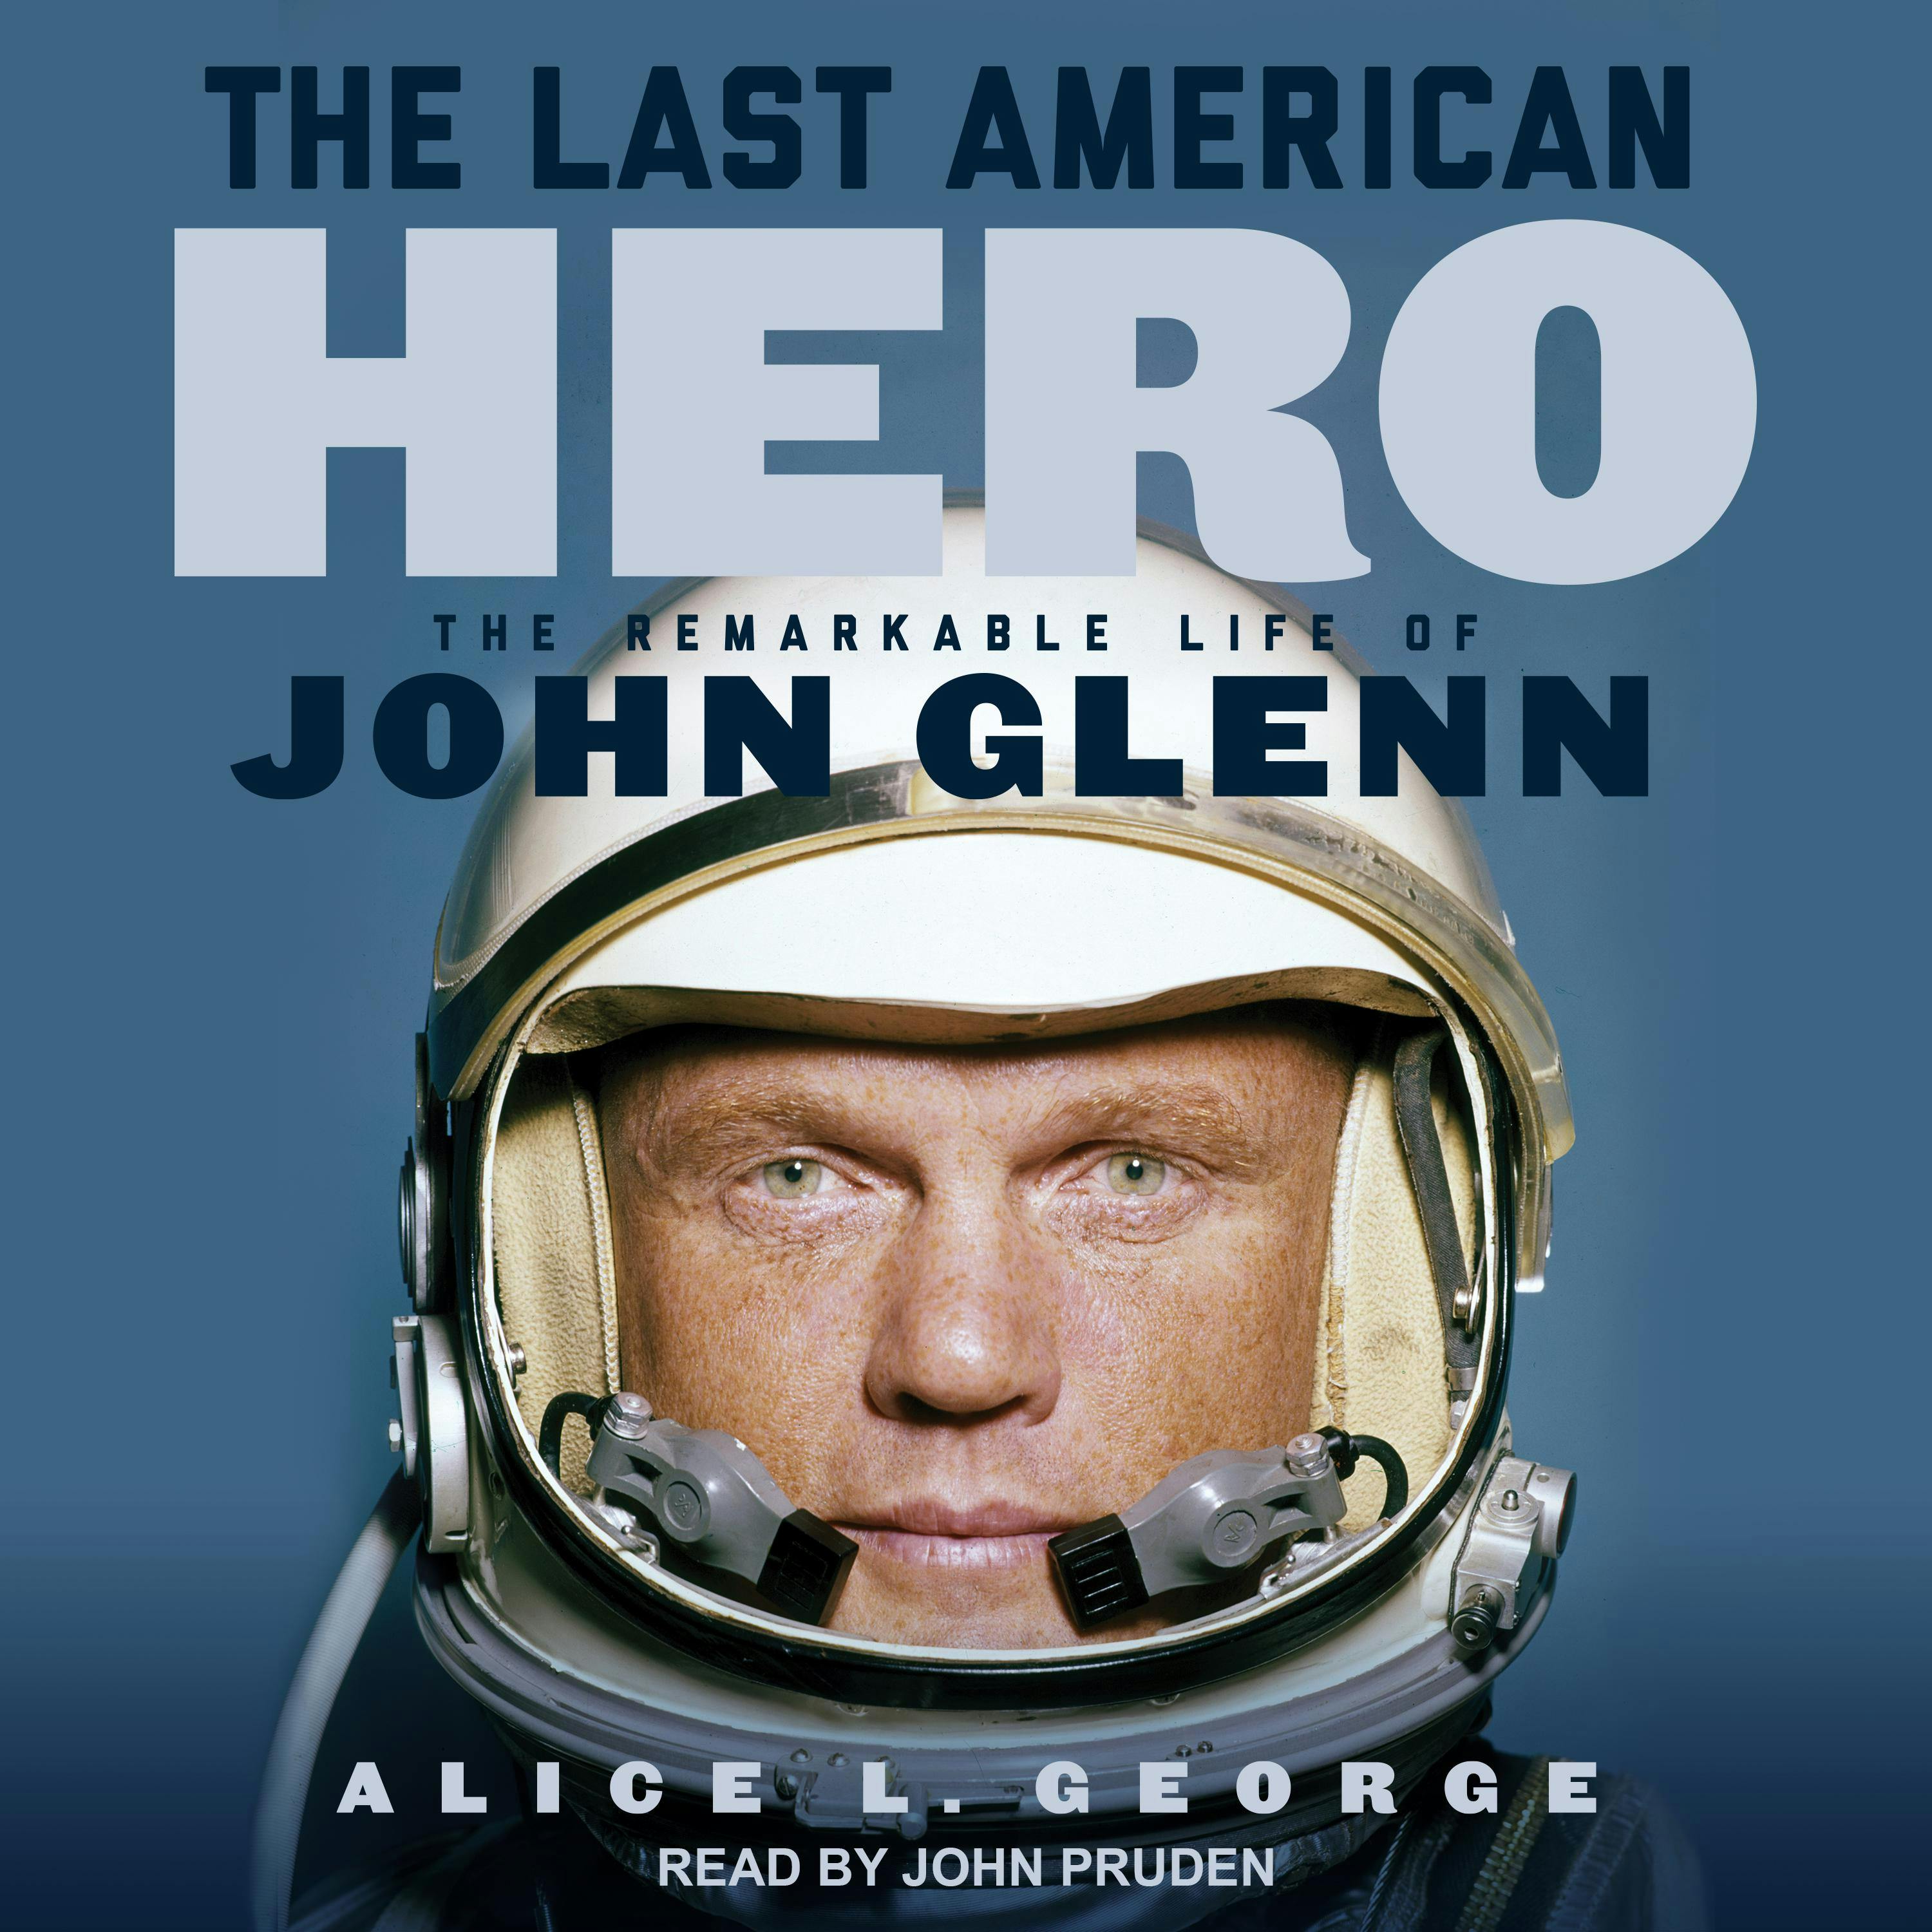 The Last American Hero: The Remarkable Life of John Glenn - Alice L. George